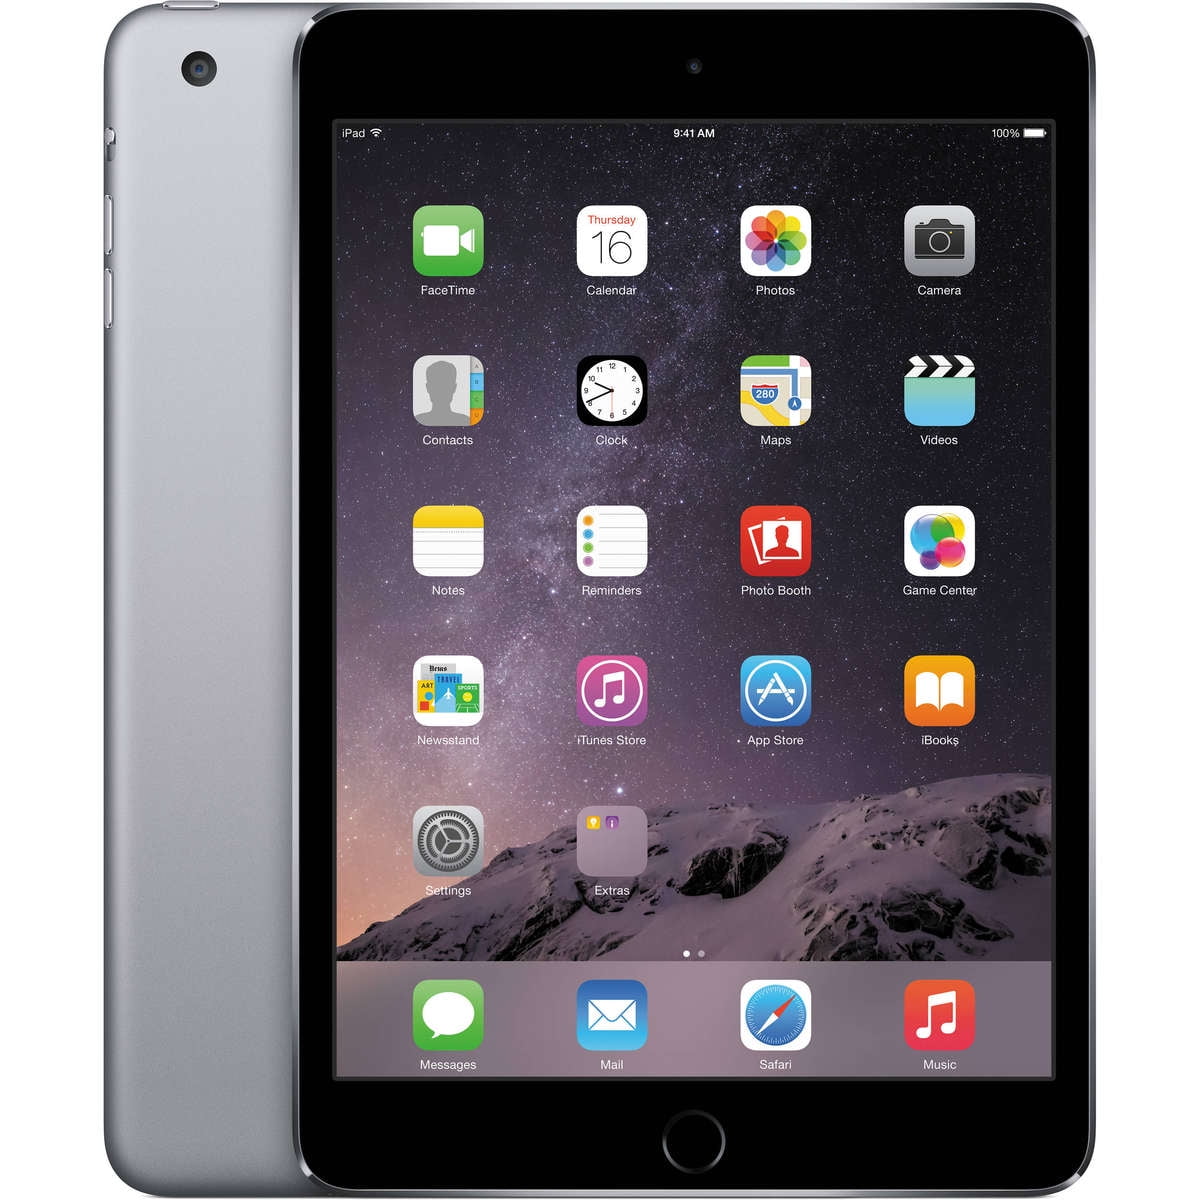 Apple iPad Mini 4 A1550 128GB GSM Unlocked Tablet-Space Gray (Pre